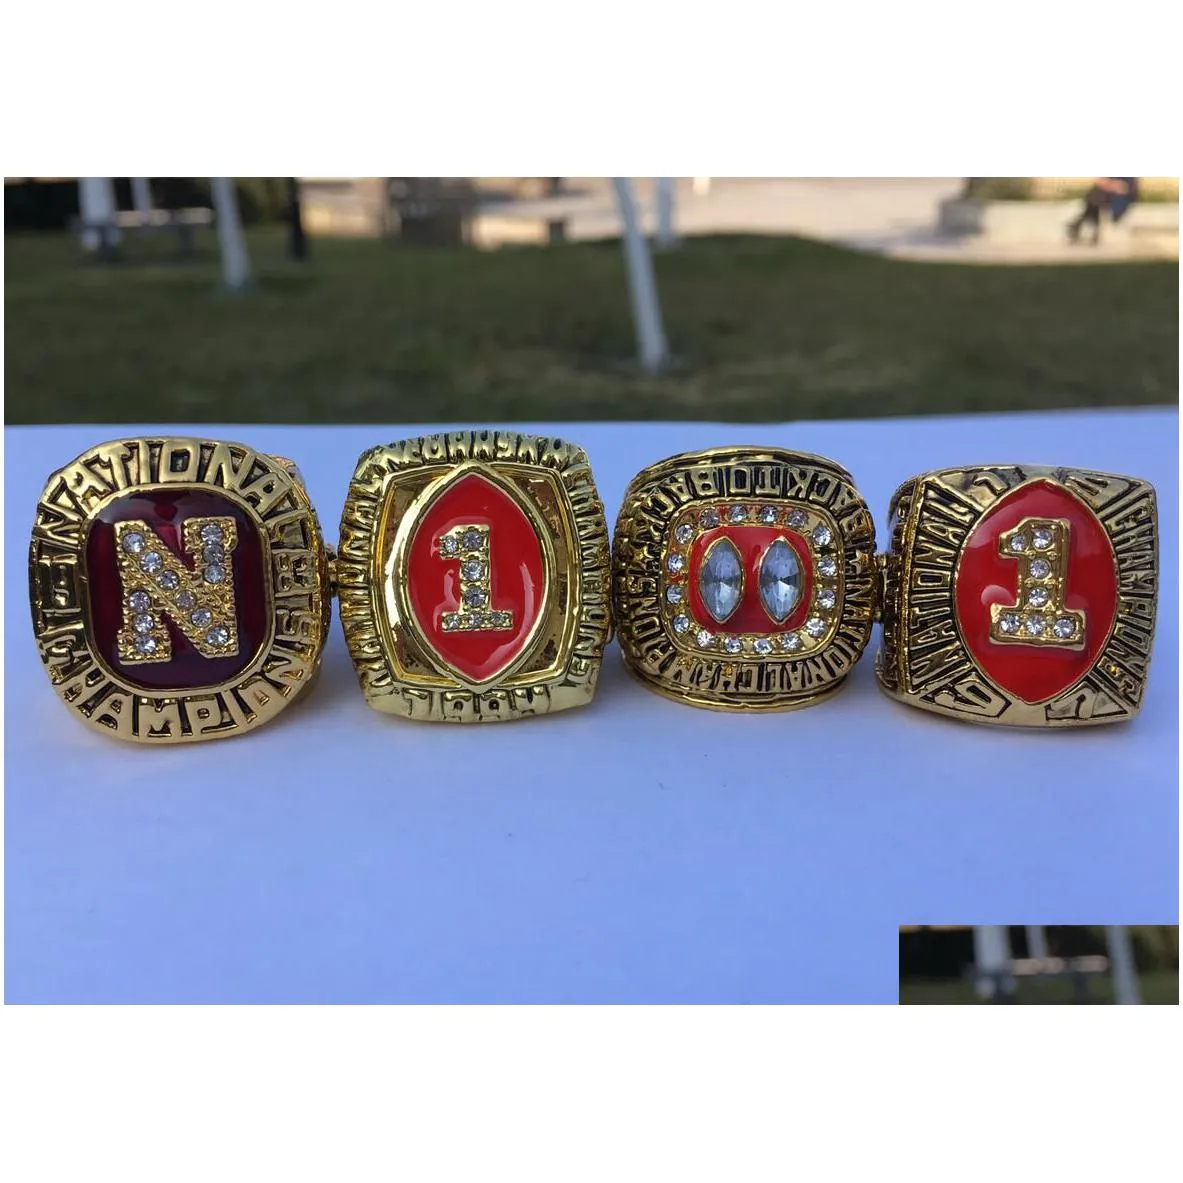 4pcs 1983 1994 1995 1997 nebraska cornhuskers national championship ring with wooden display box men fan gift 2019 wholesale drop